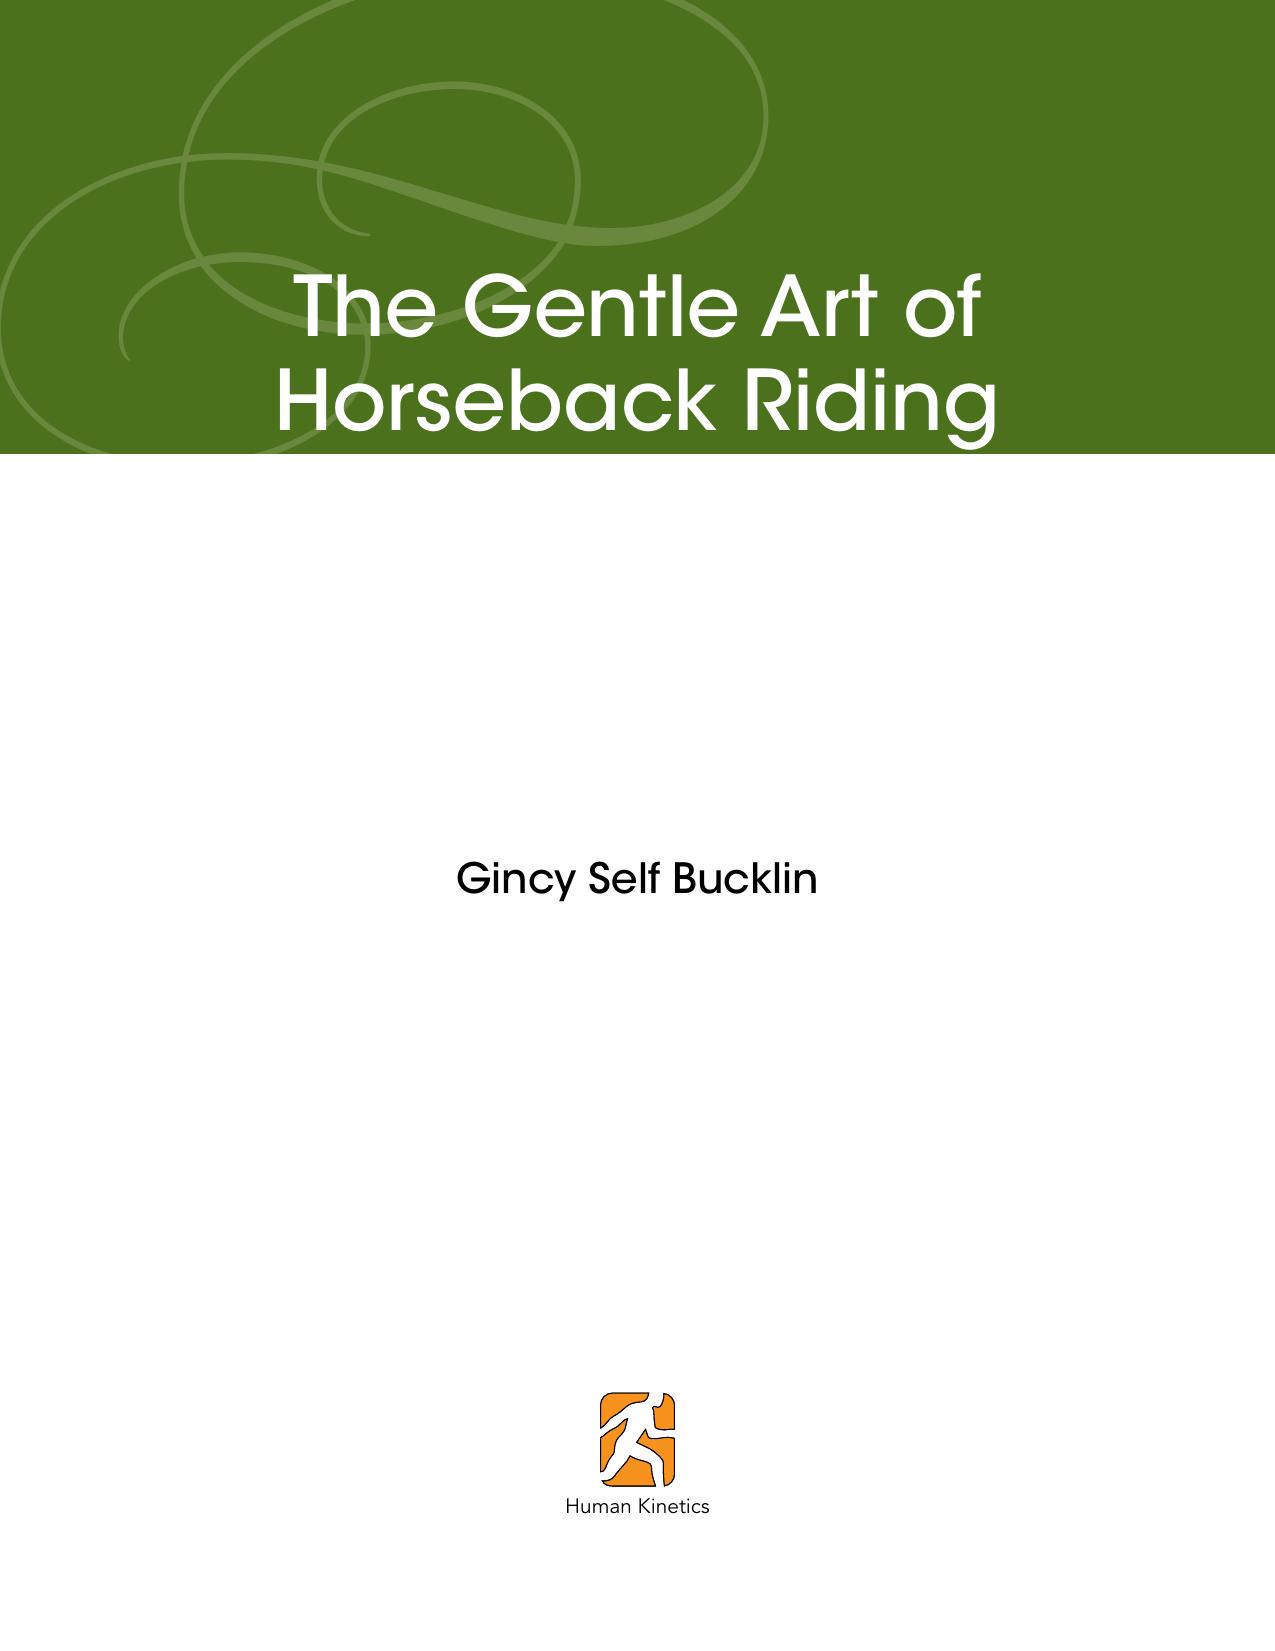 The Gentle Art of Horseback Riding by Gincy Self Bucklin